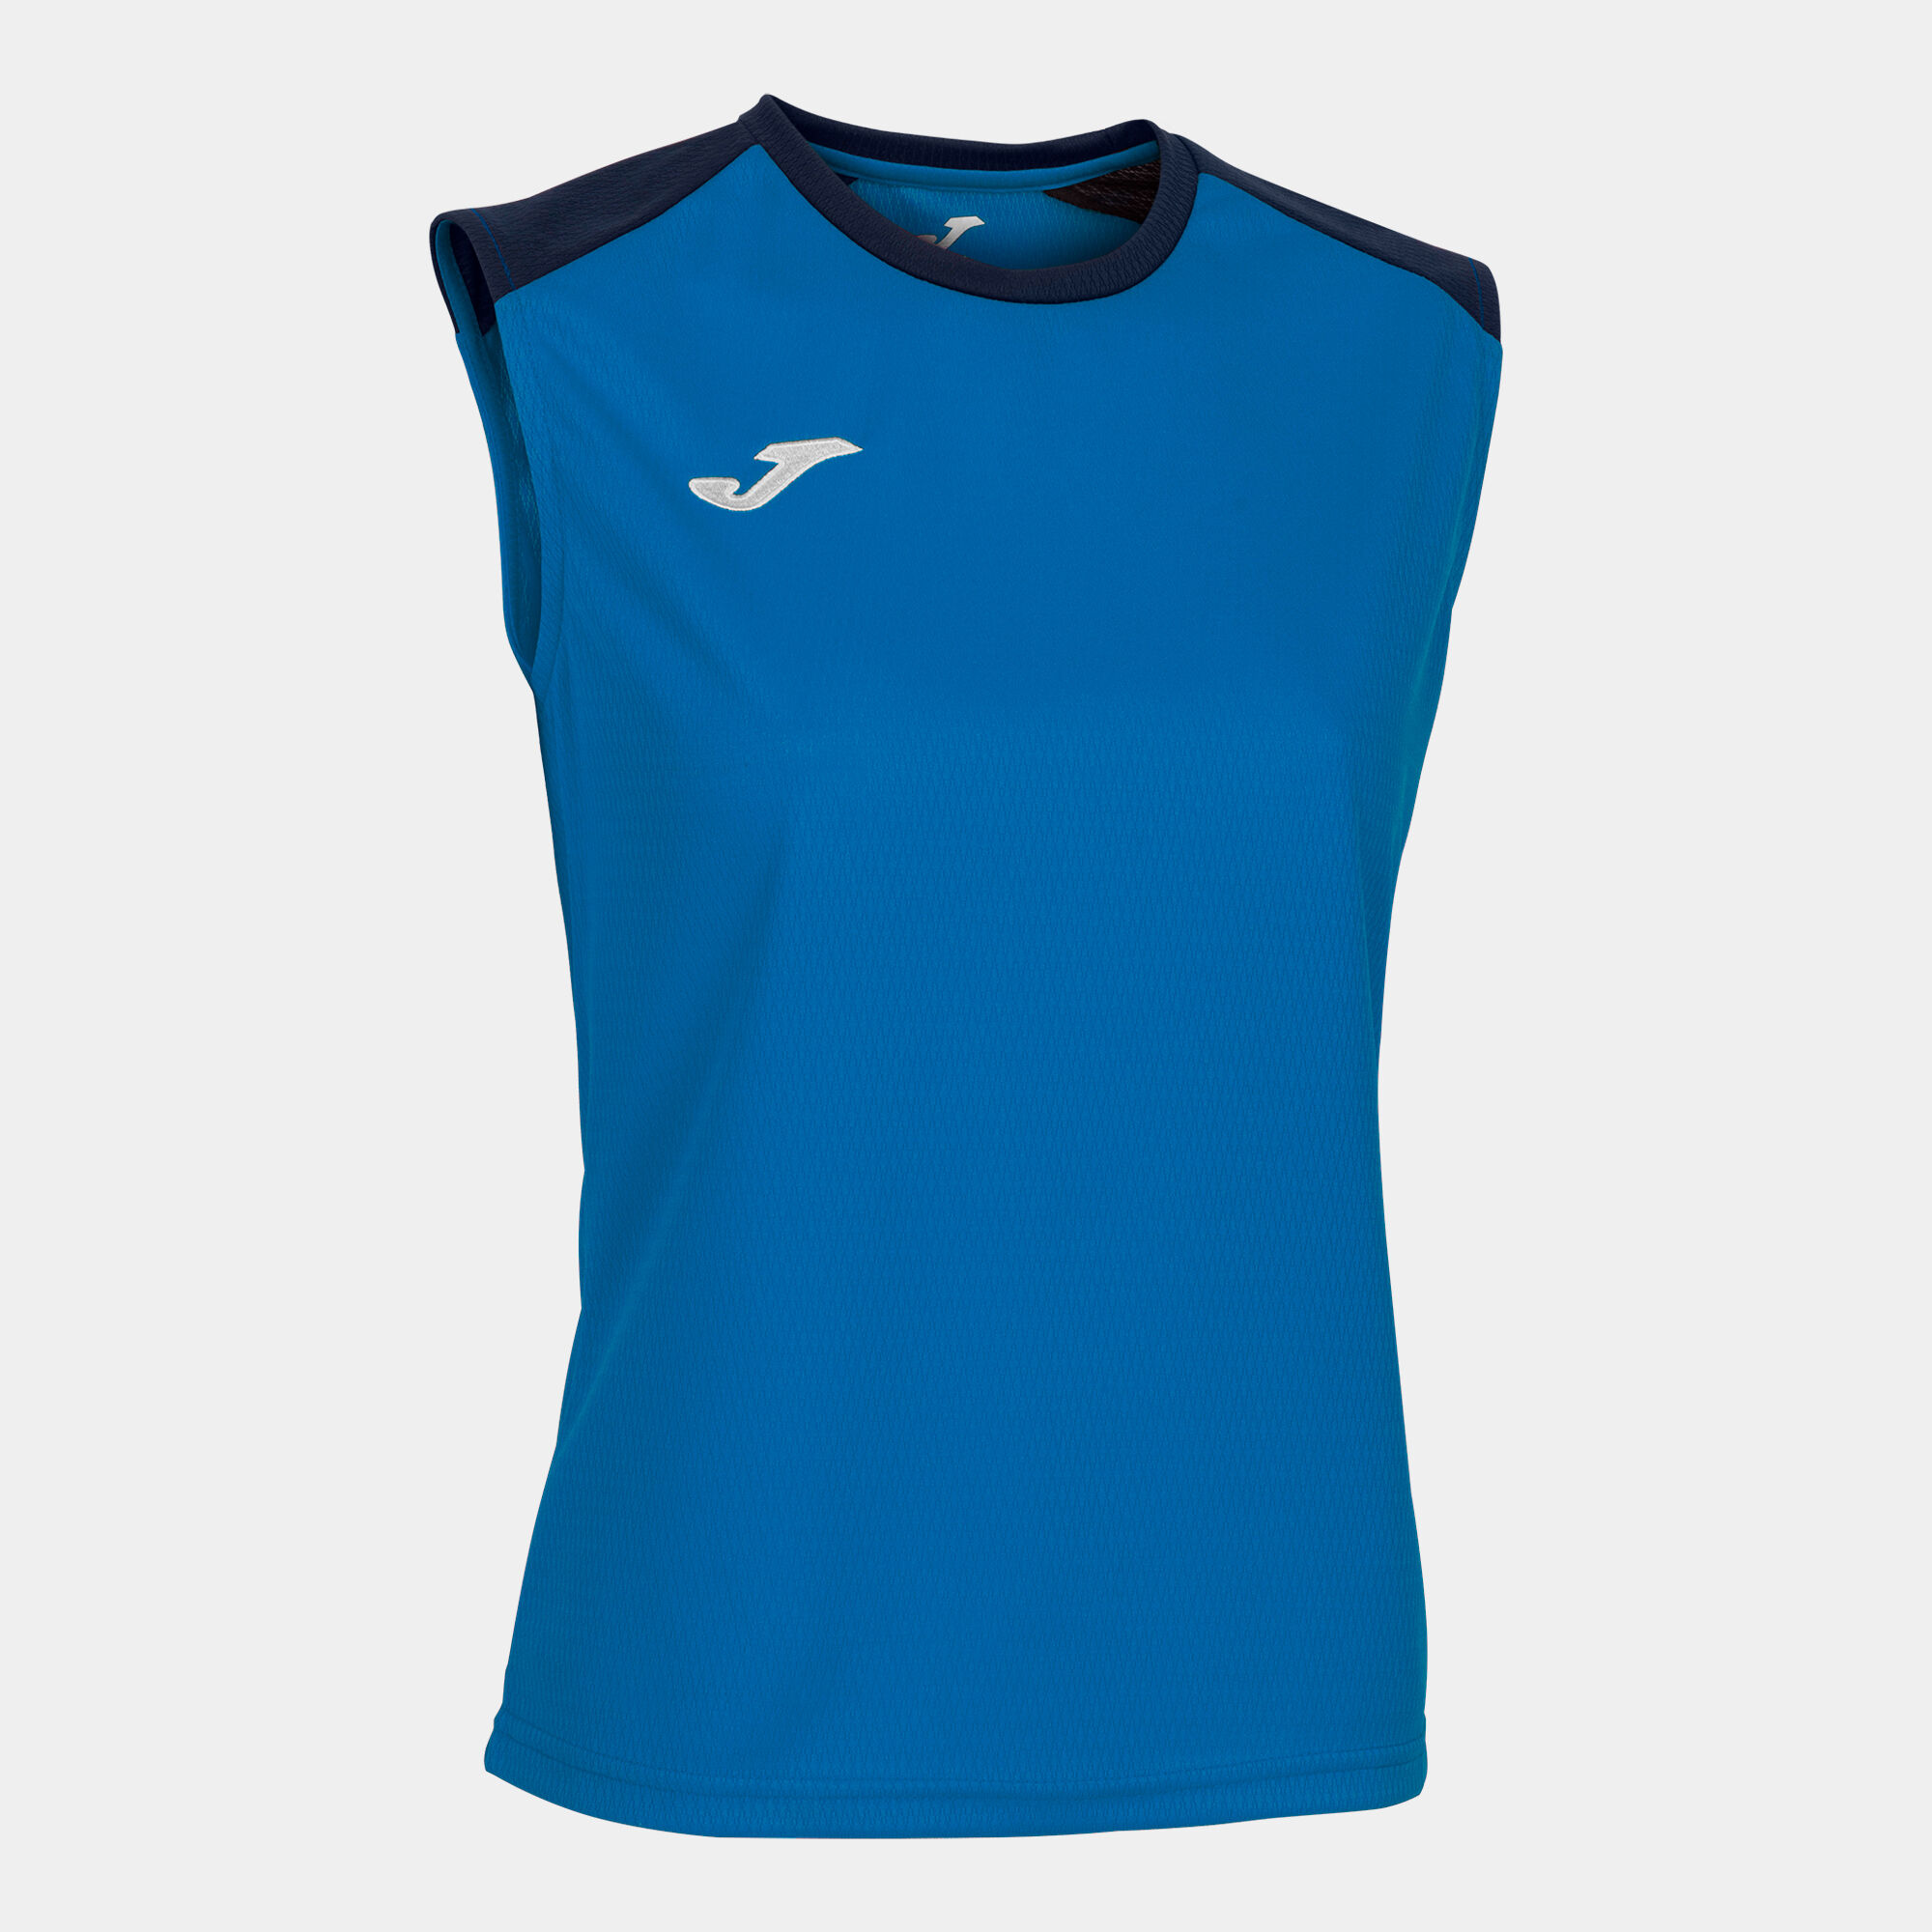 Schulterriemen-shirt frau Eco Championship königsblau marineblau